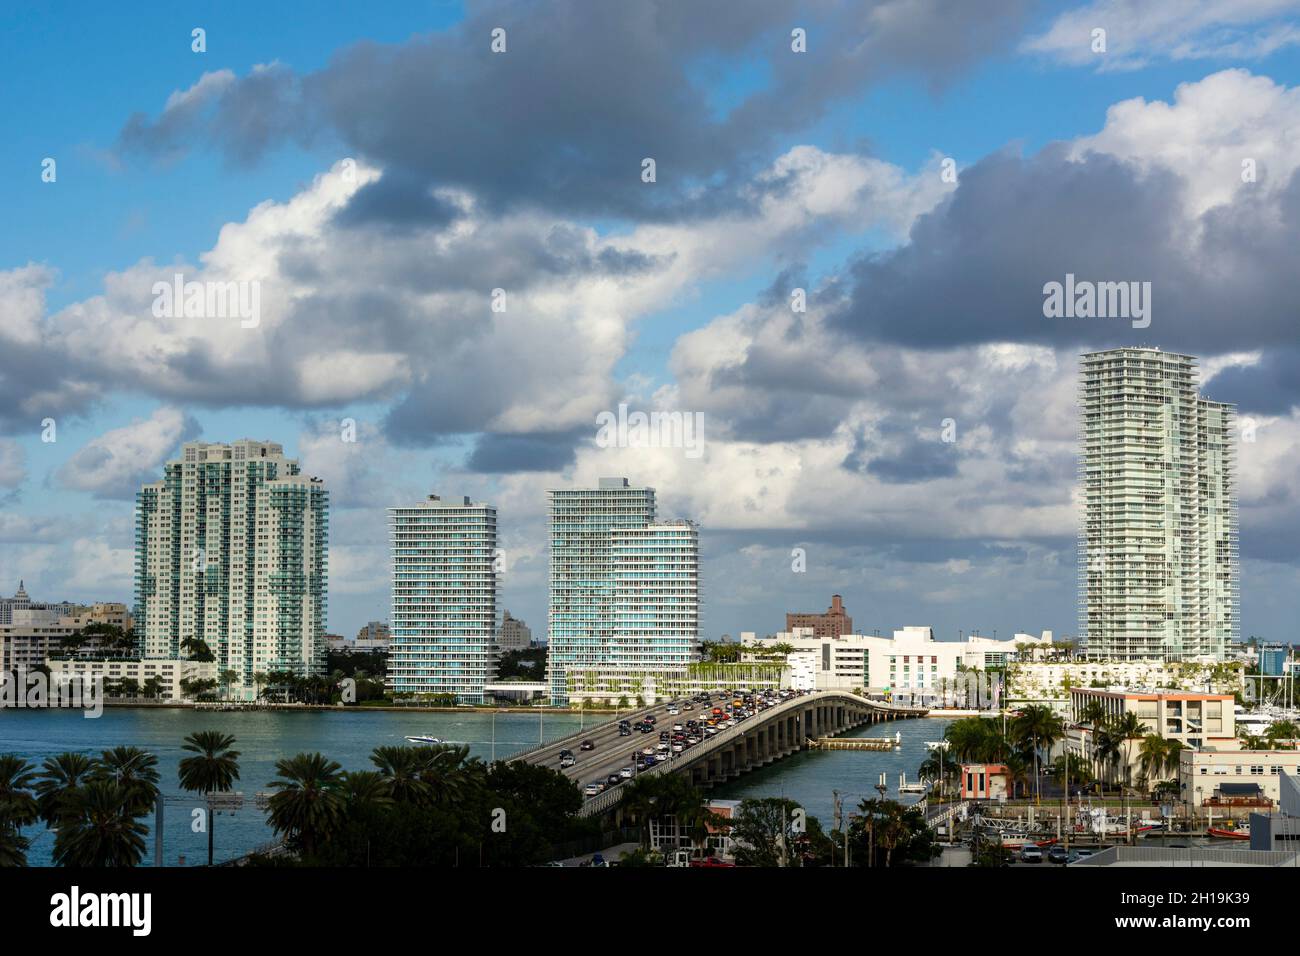 A view of the MacArthur Causeway and modern buildings in South Beach. South Beach, Miami Beach, Florida. Stock Photo